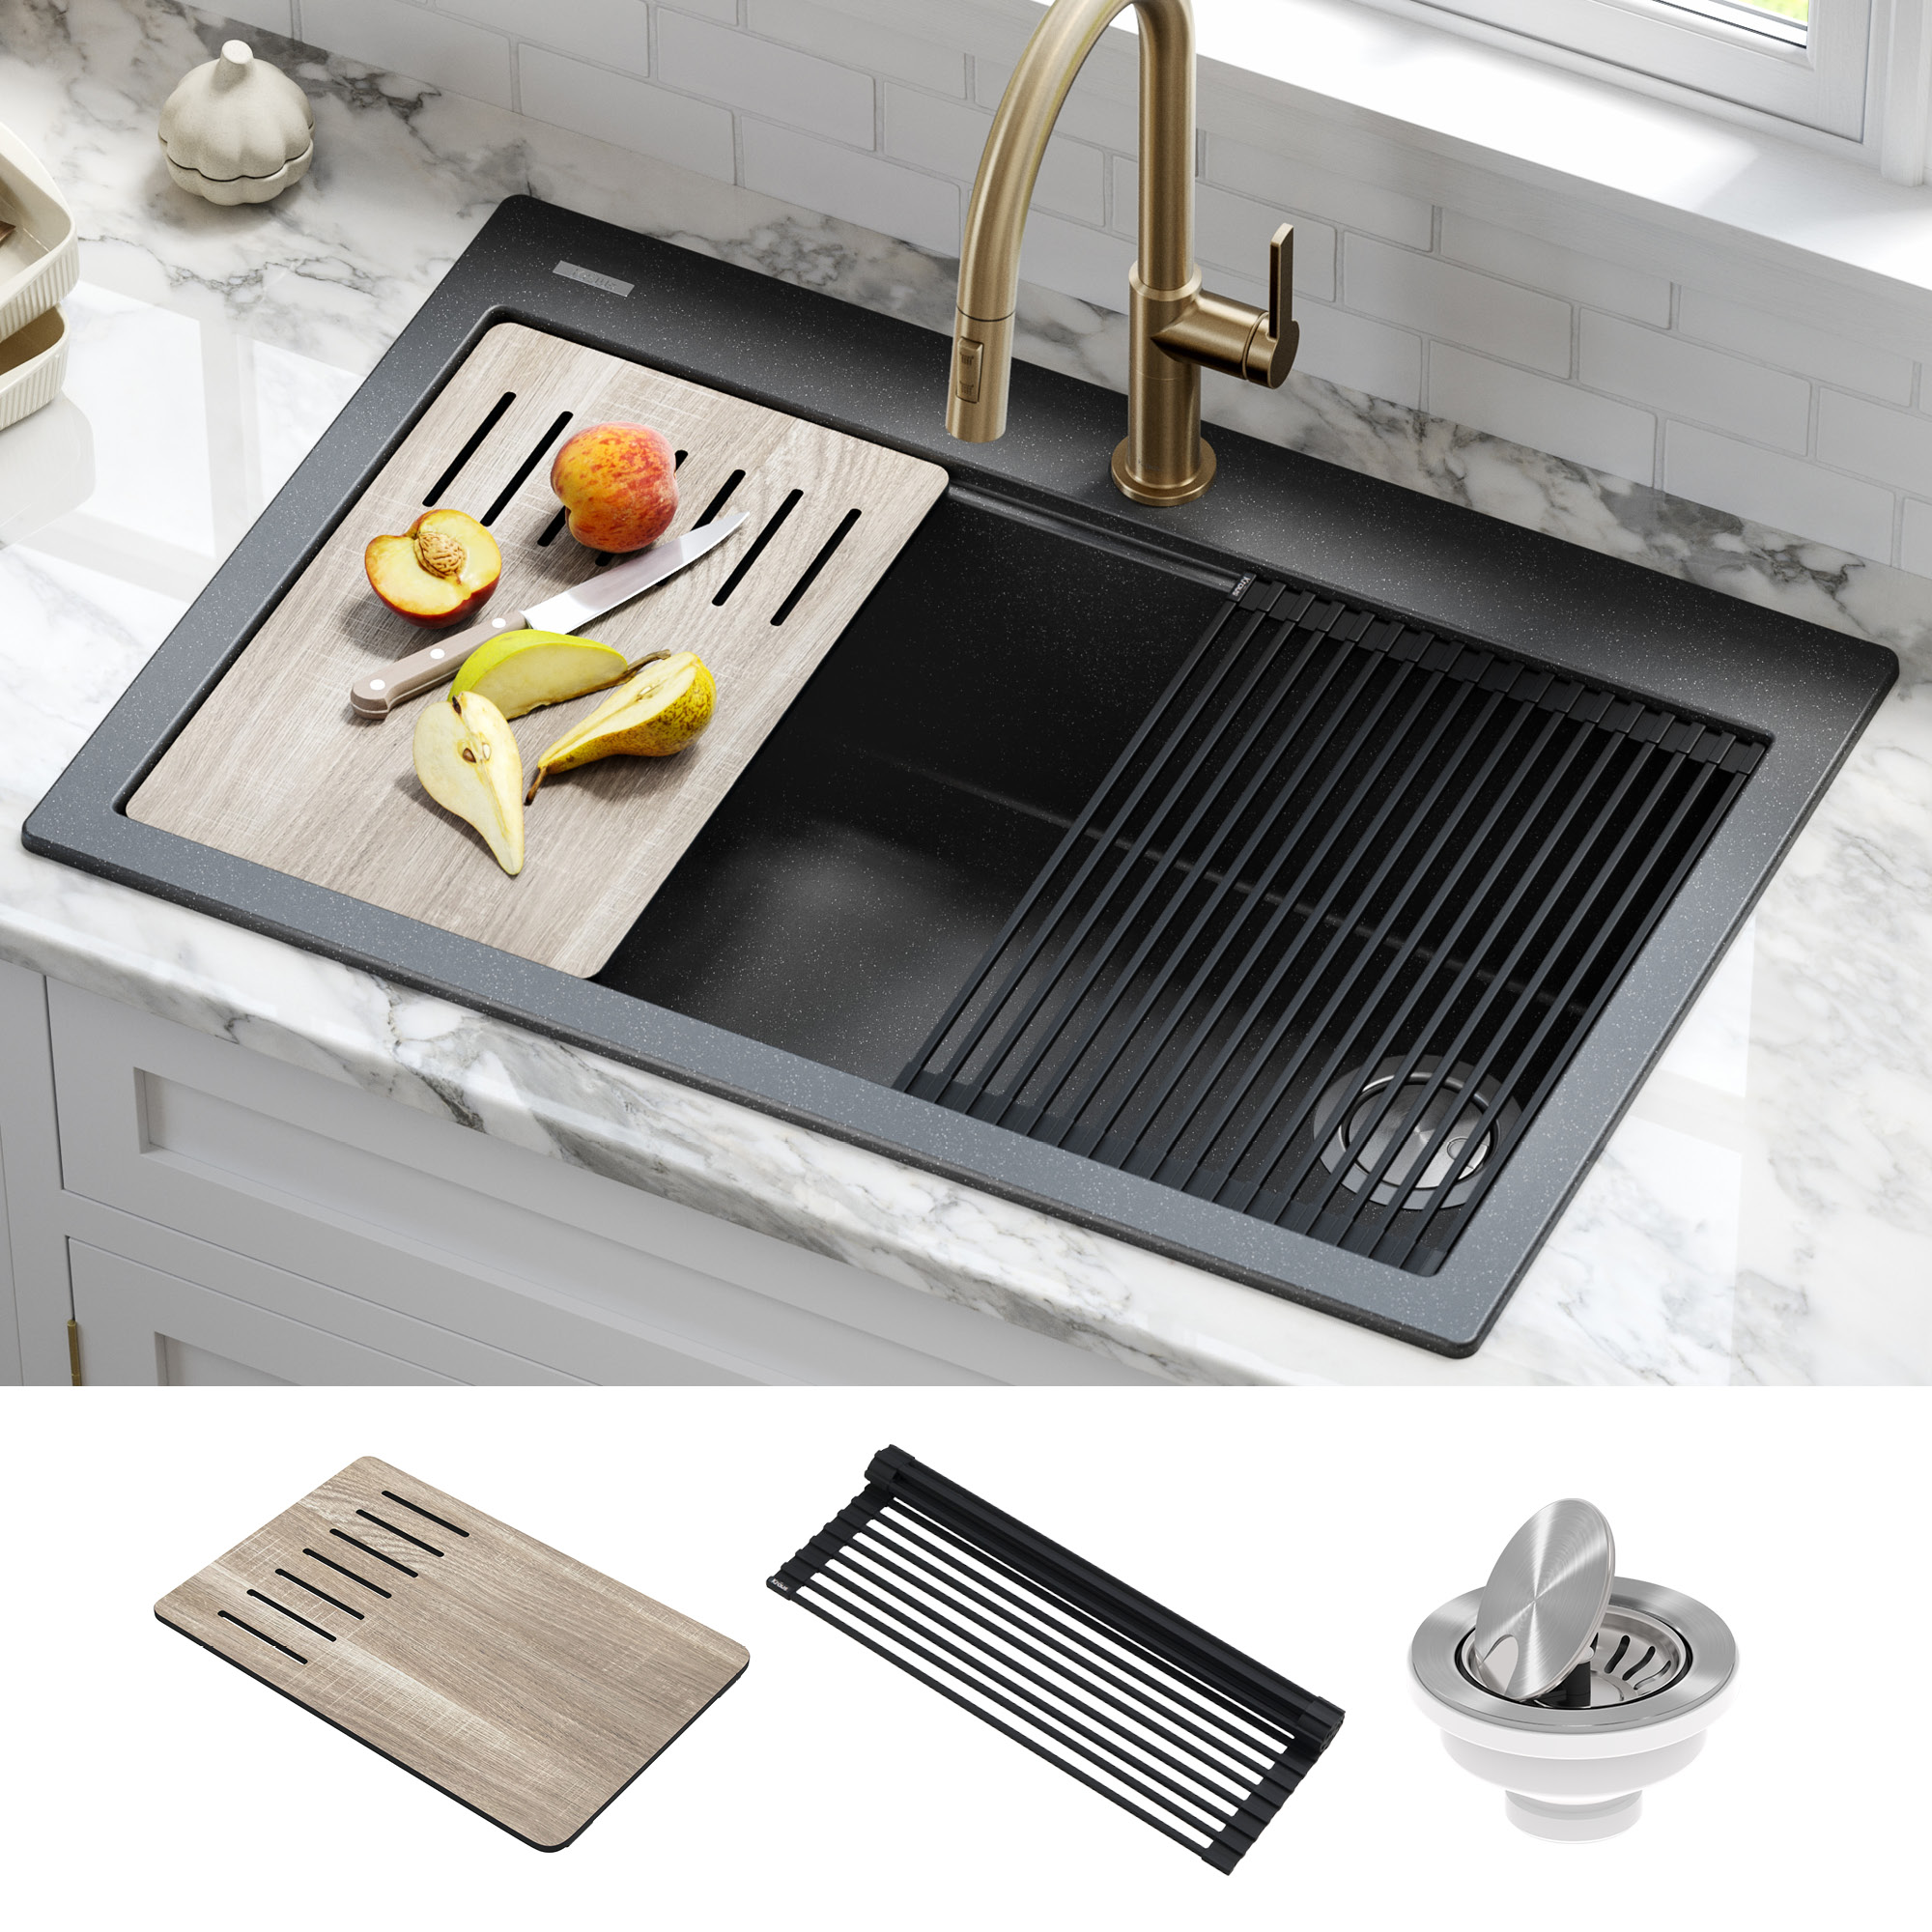 Kraus Bellucci Workstation 33 inch Drop-In Granite Composite Single Bowl Kitchen Sink in Metallic Black with Accessories - image 1 of 14